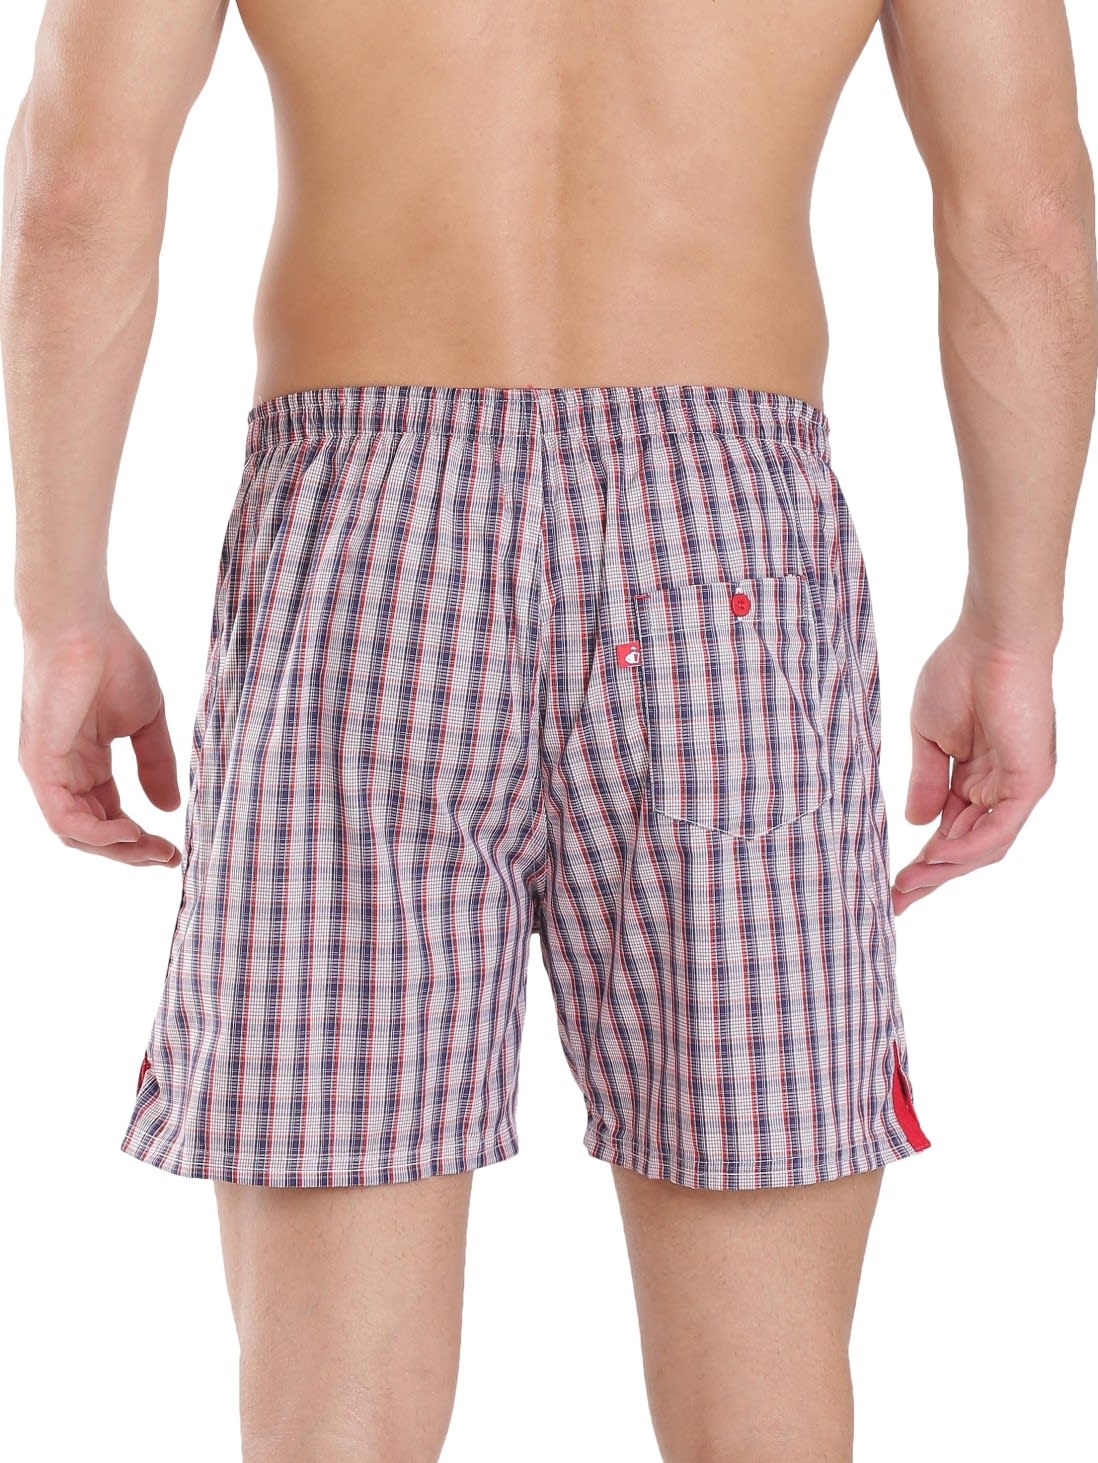 Jockey Men Apparel Bottoms | Assorted Checks Boxer Shorts